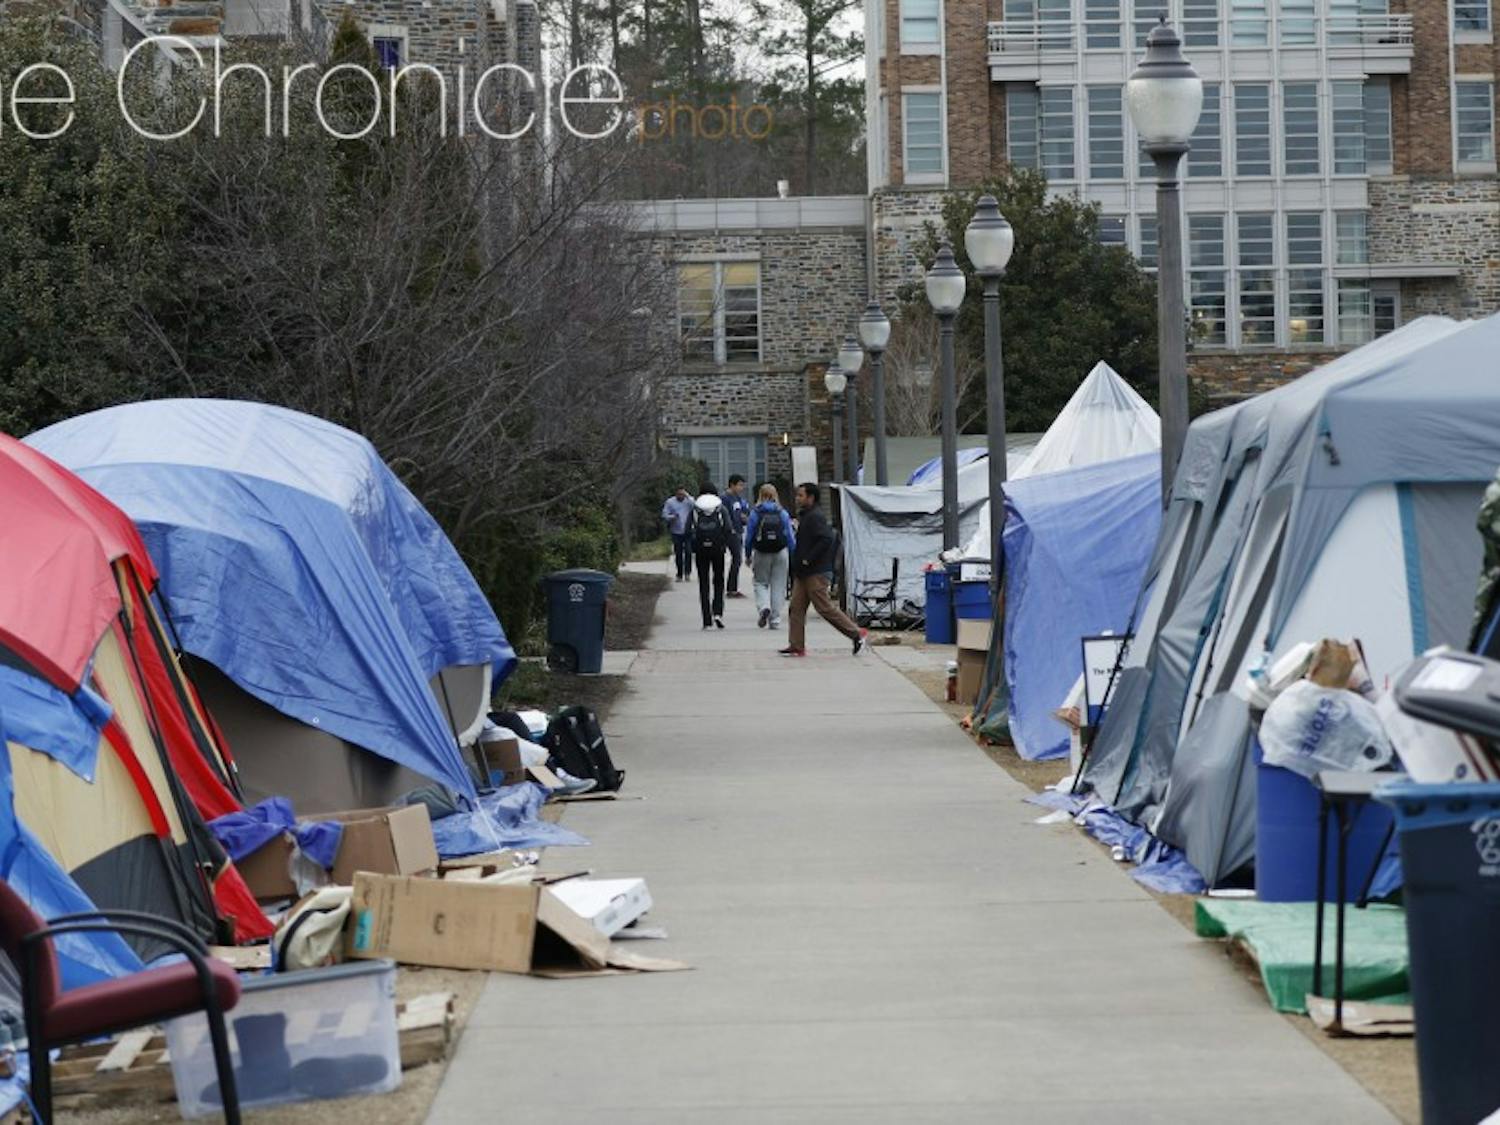 Duke students often tent for their love of basketball or desire for more community.